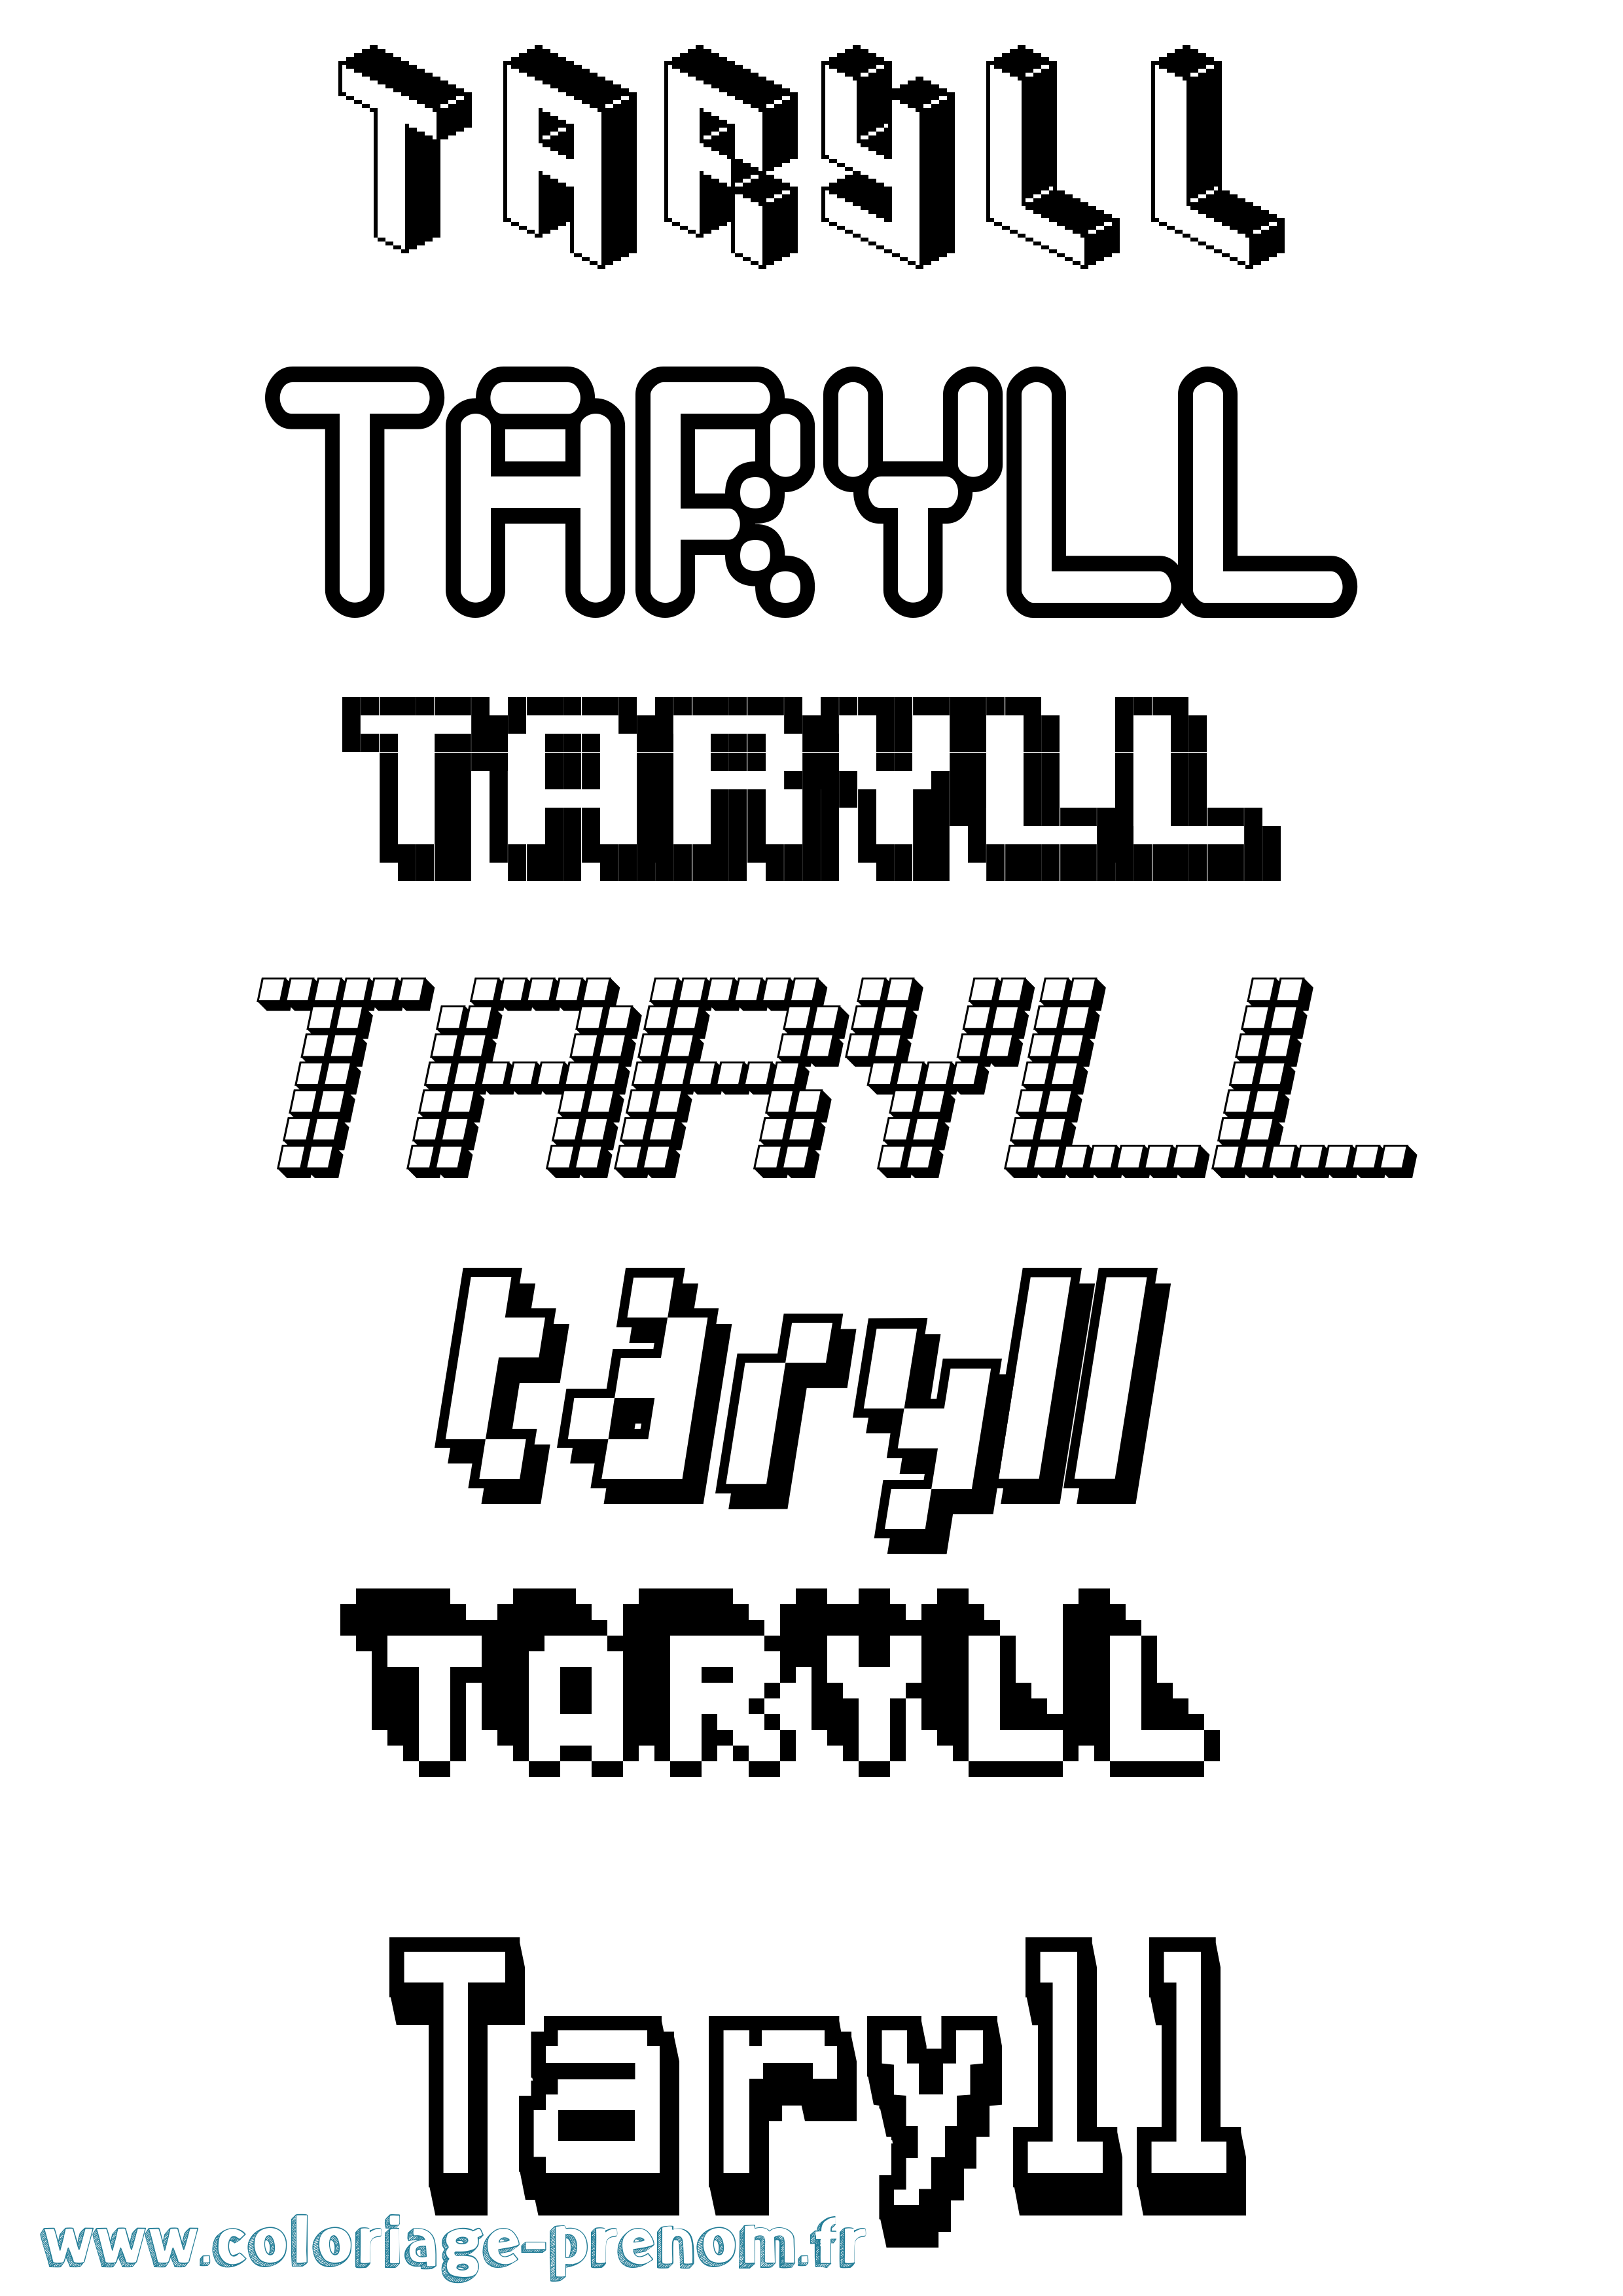 Coloriage prénom Taryll Pixel